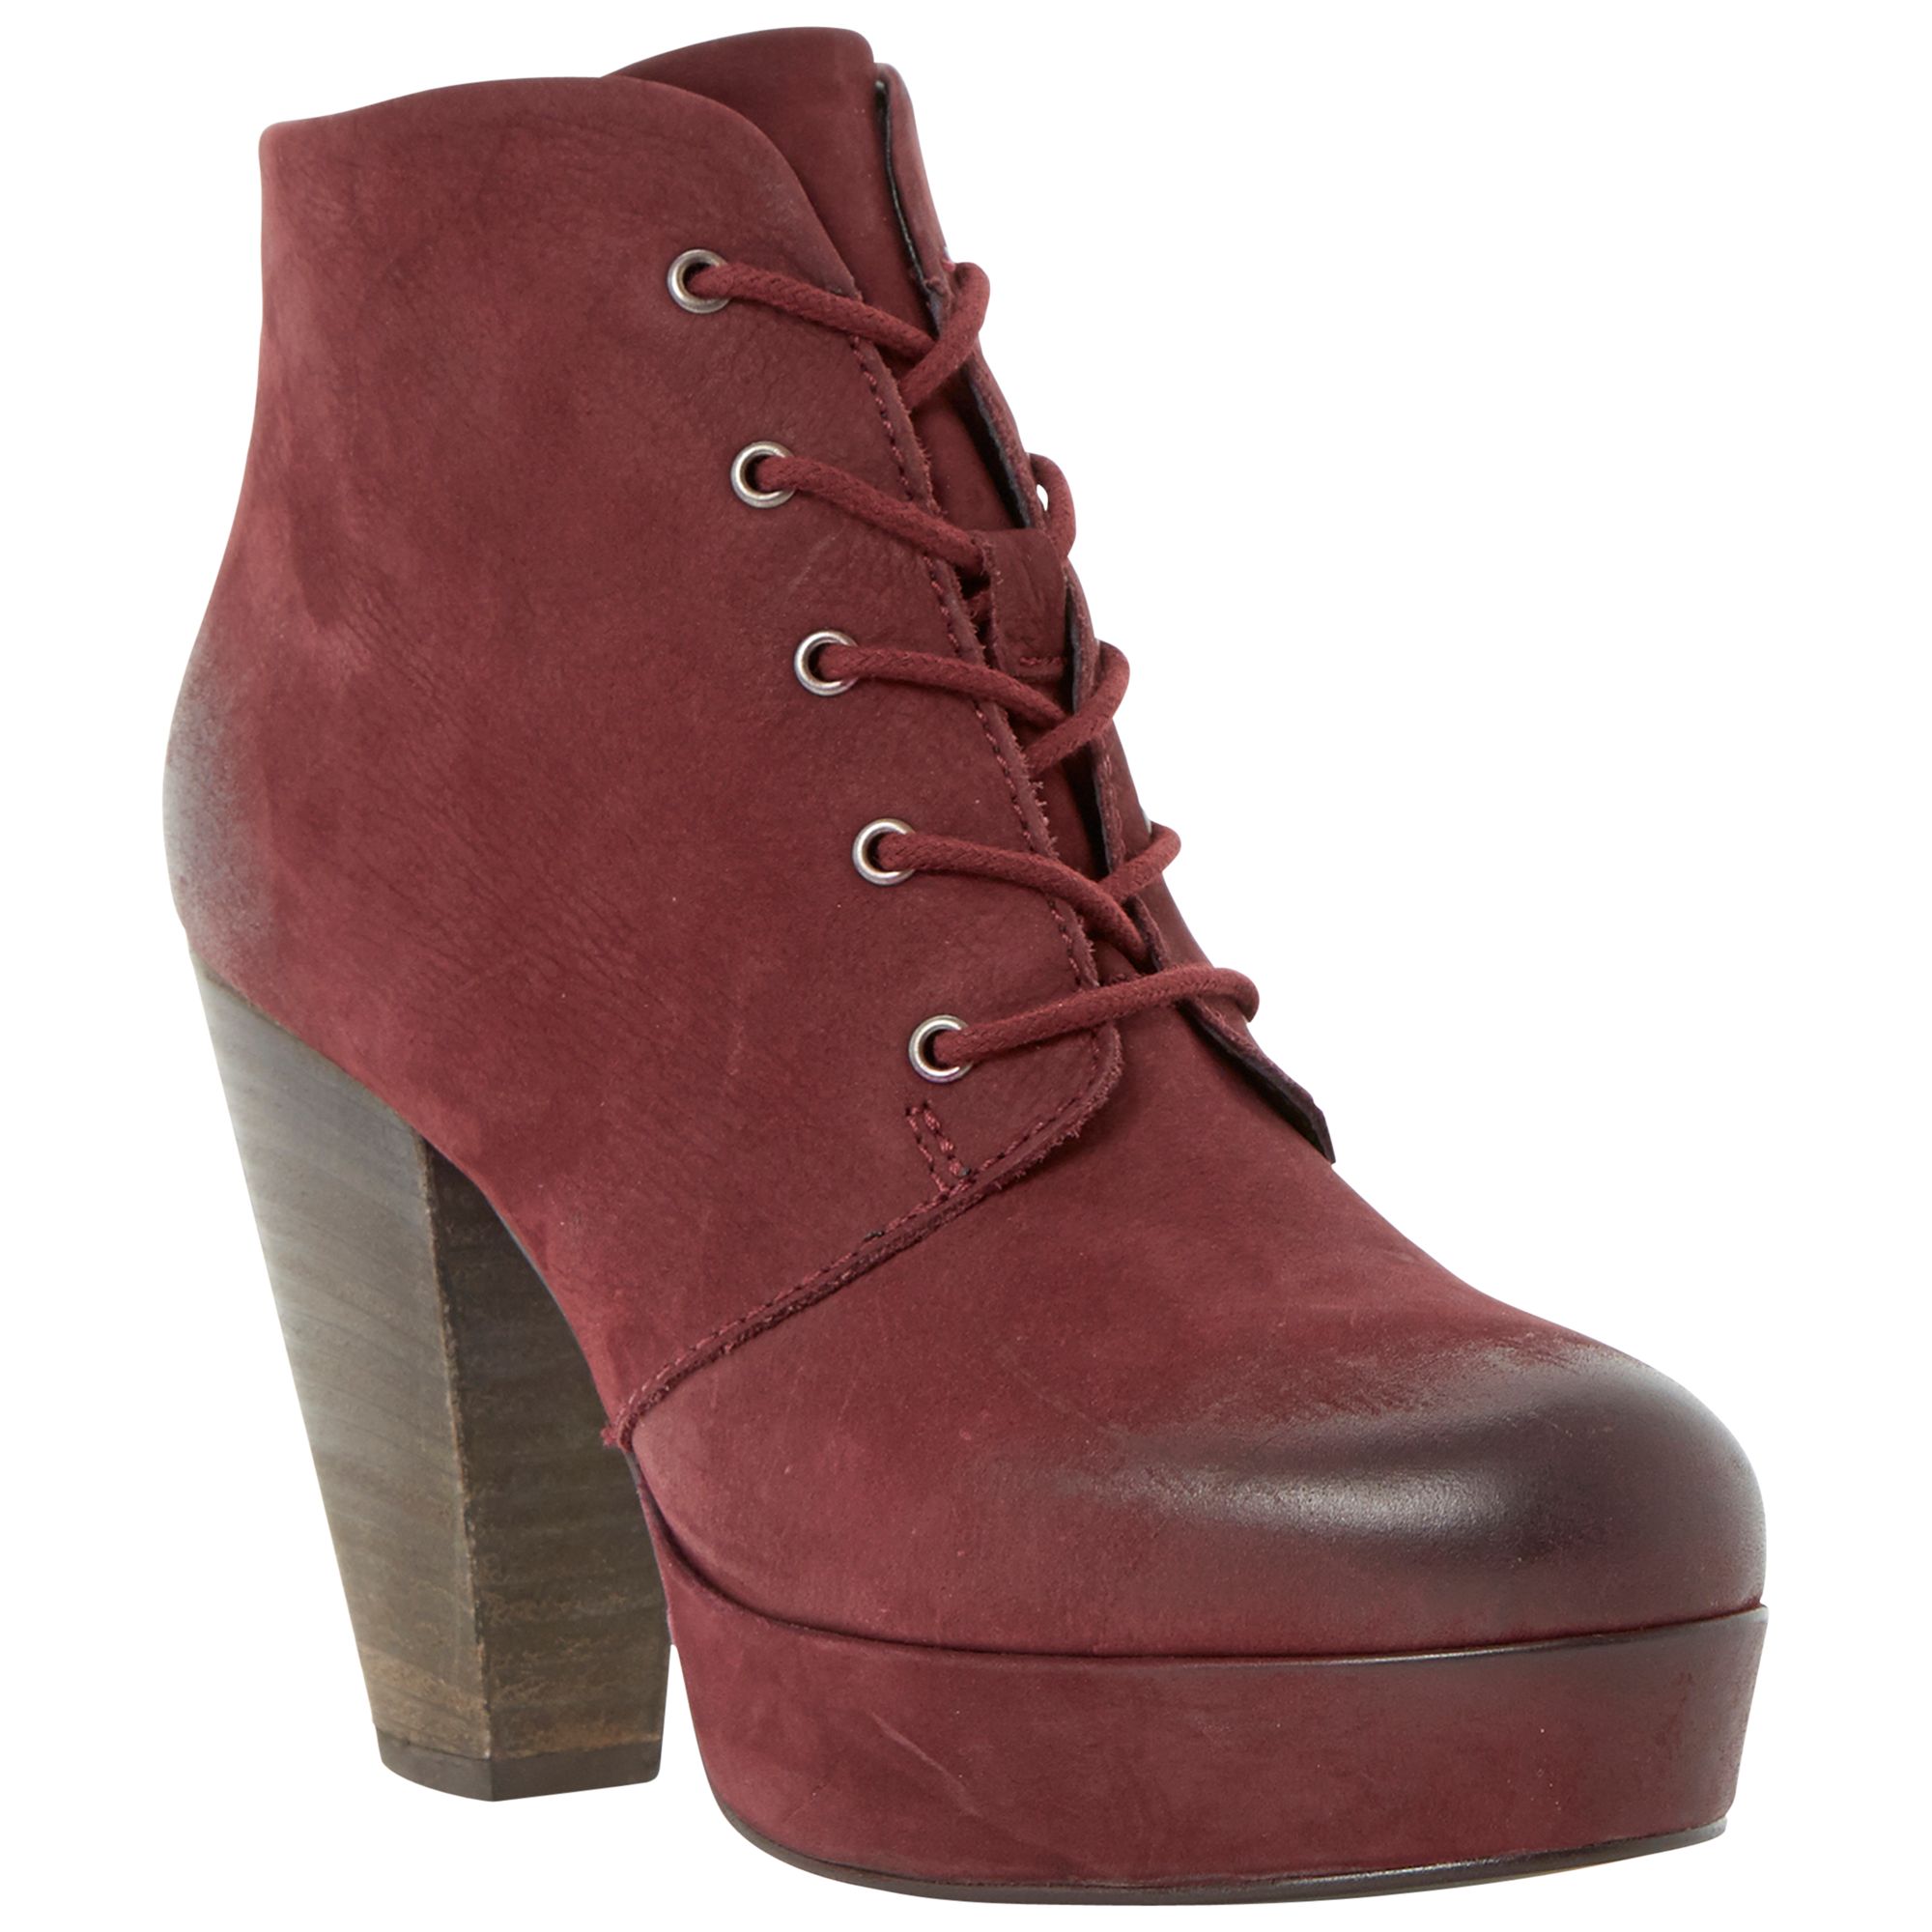 Buy Steve Madden Raspy Platform Leather Ankle Boots Online at ...